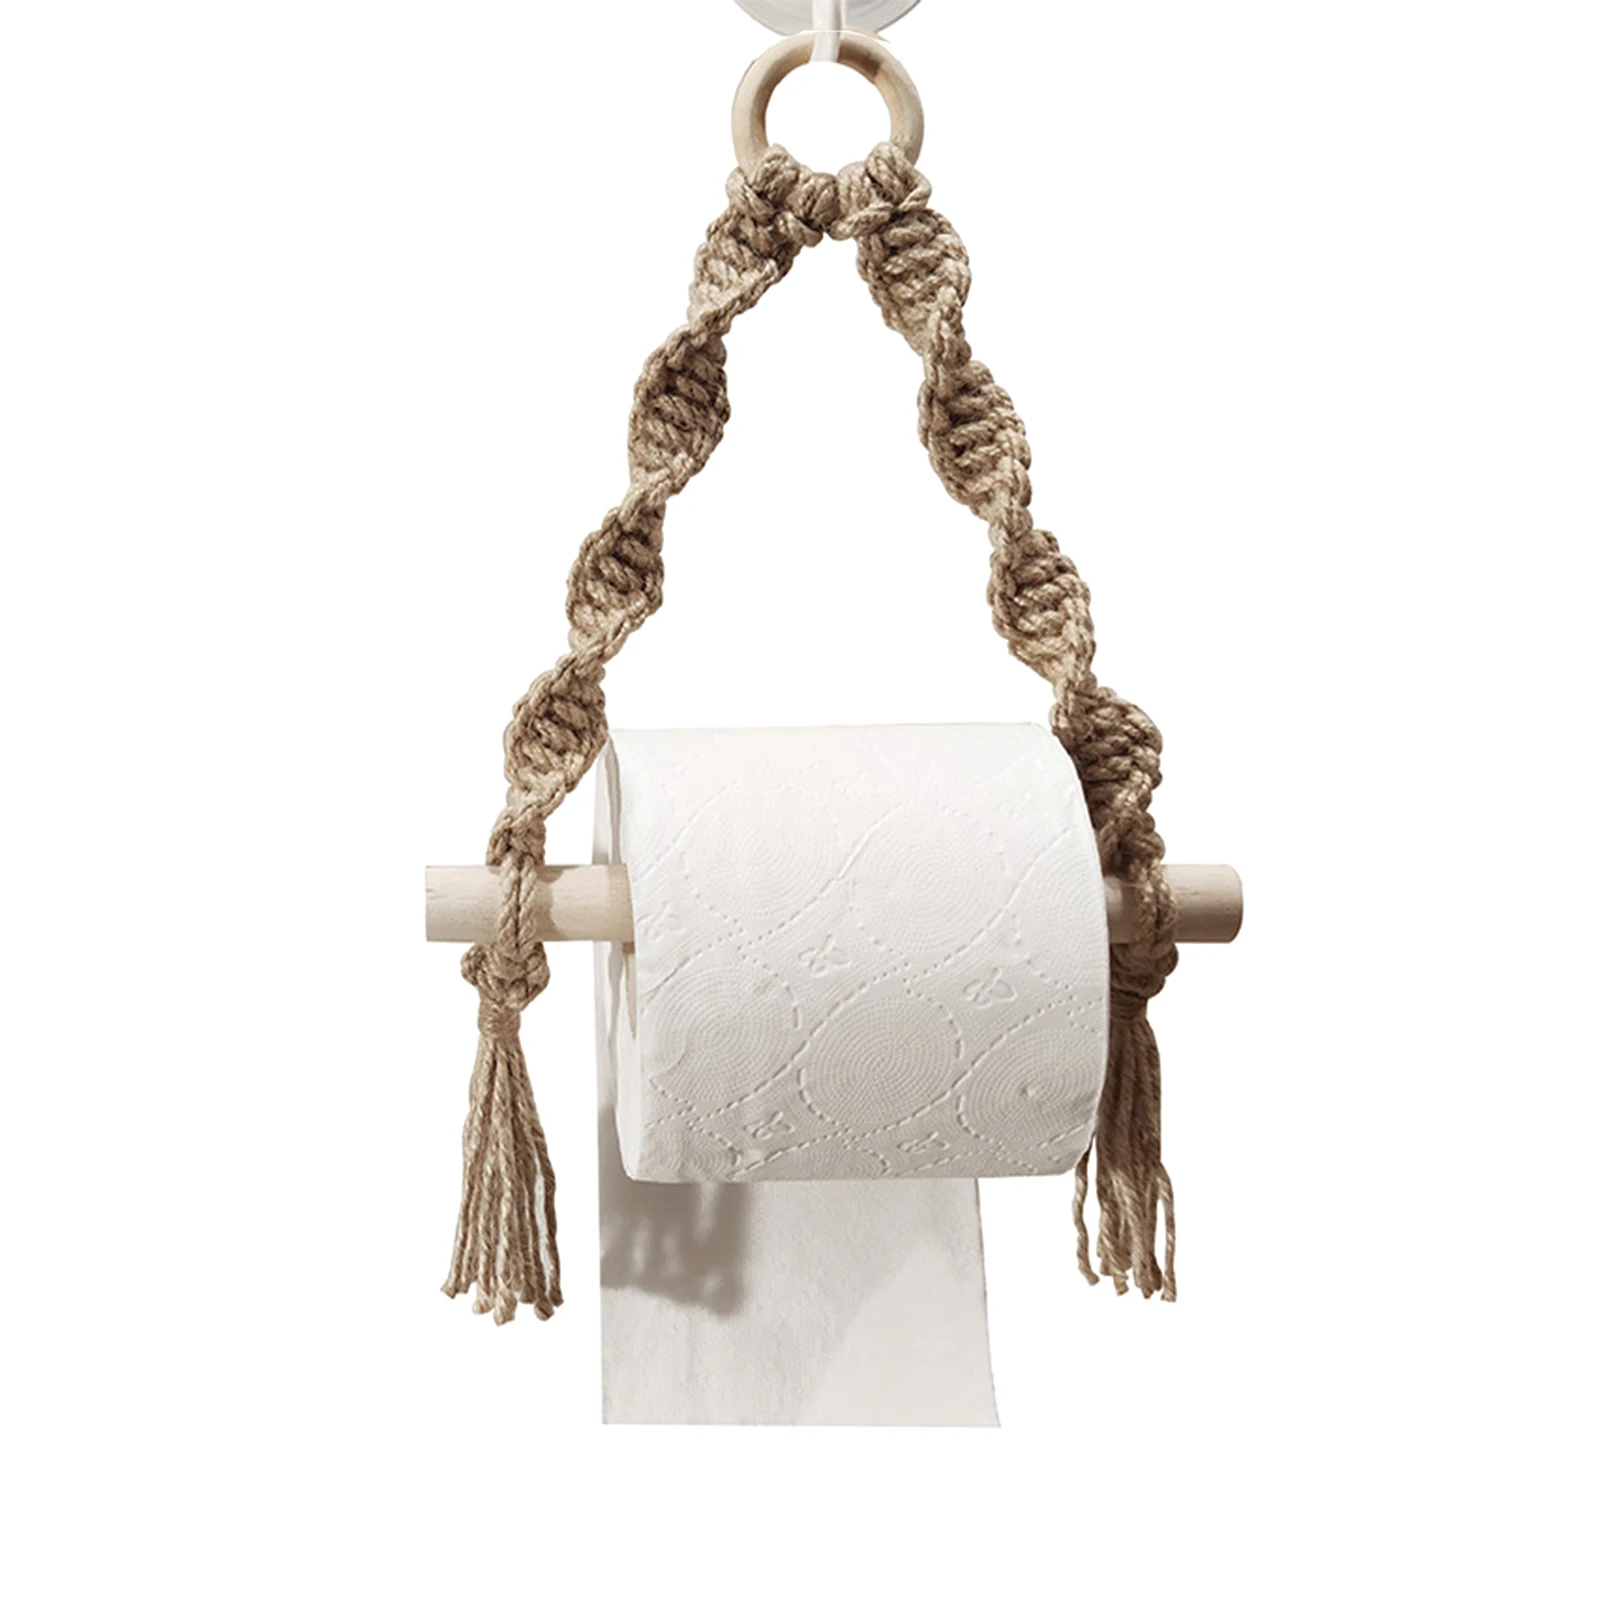 https://ae01.alicdn.com/kf/S5094141516744b15a90537d78d7e16a86/Hotel-Rack-Toilet-Paper-Holder-Bathroom-Organizer-Towel-Hanging-Rope-Nordic-Vintage-Home-Decoration-Tapestry-Macrame.jpg